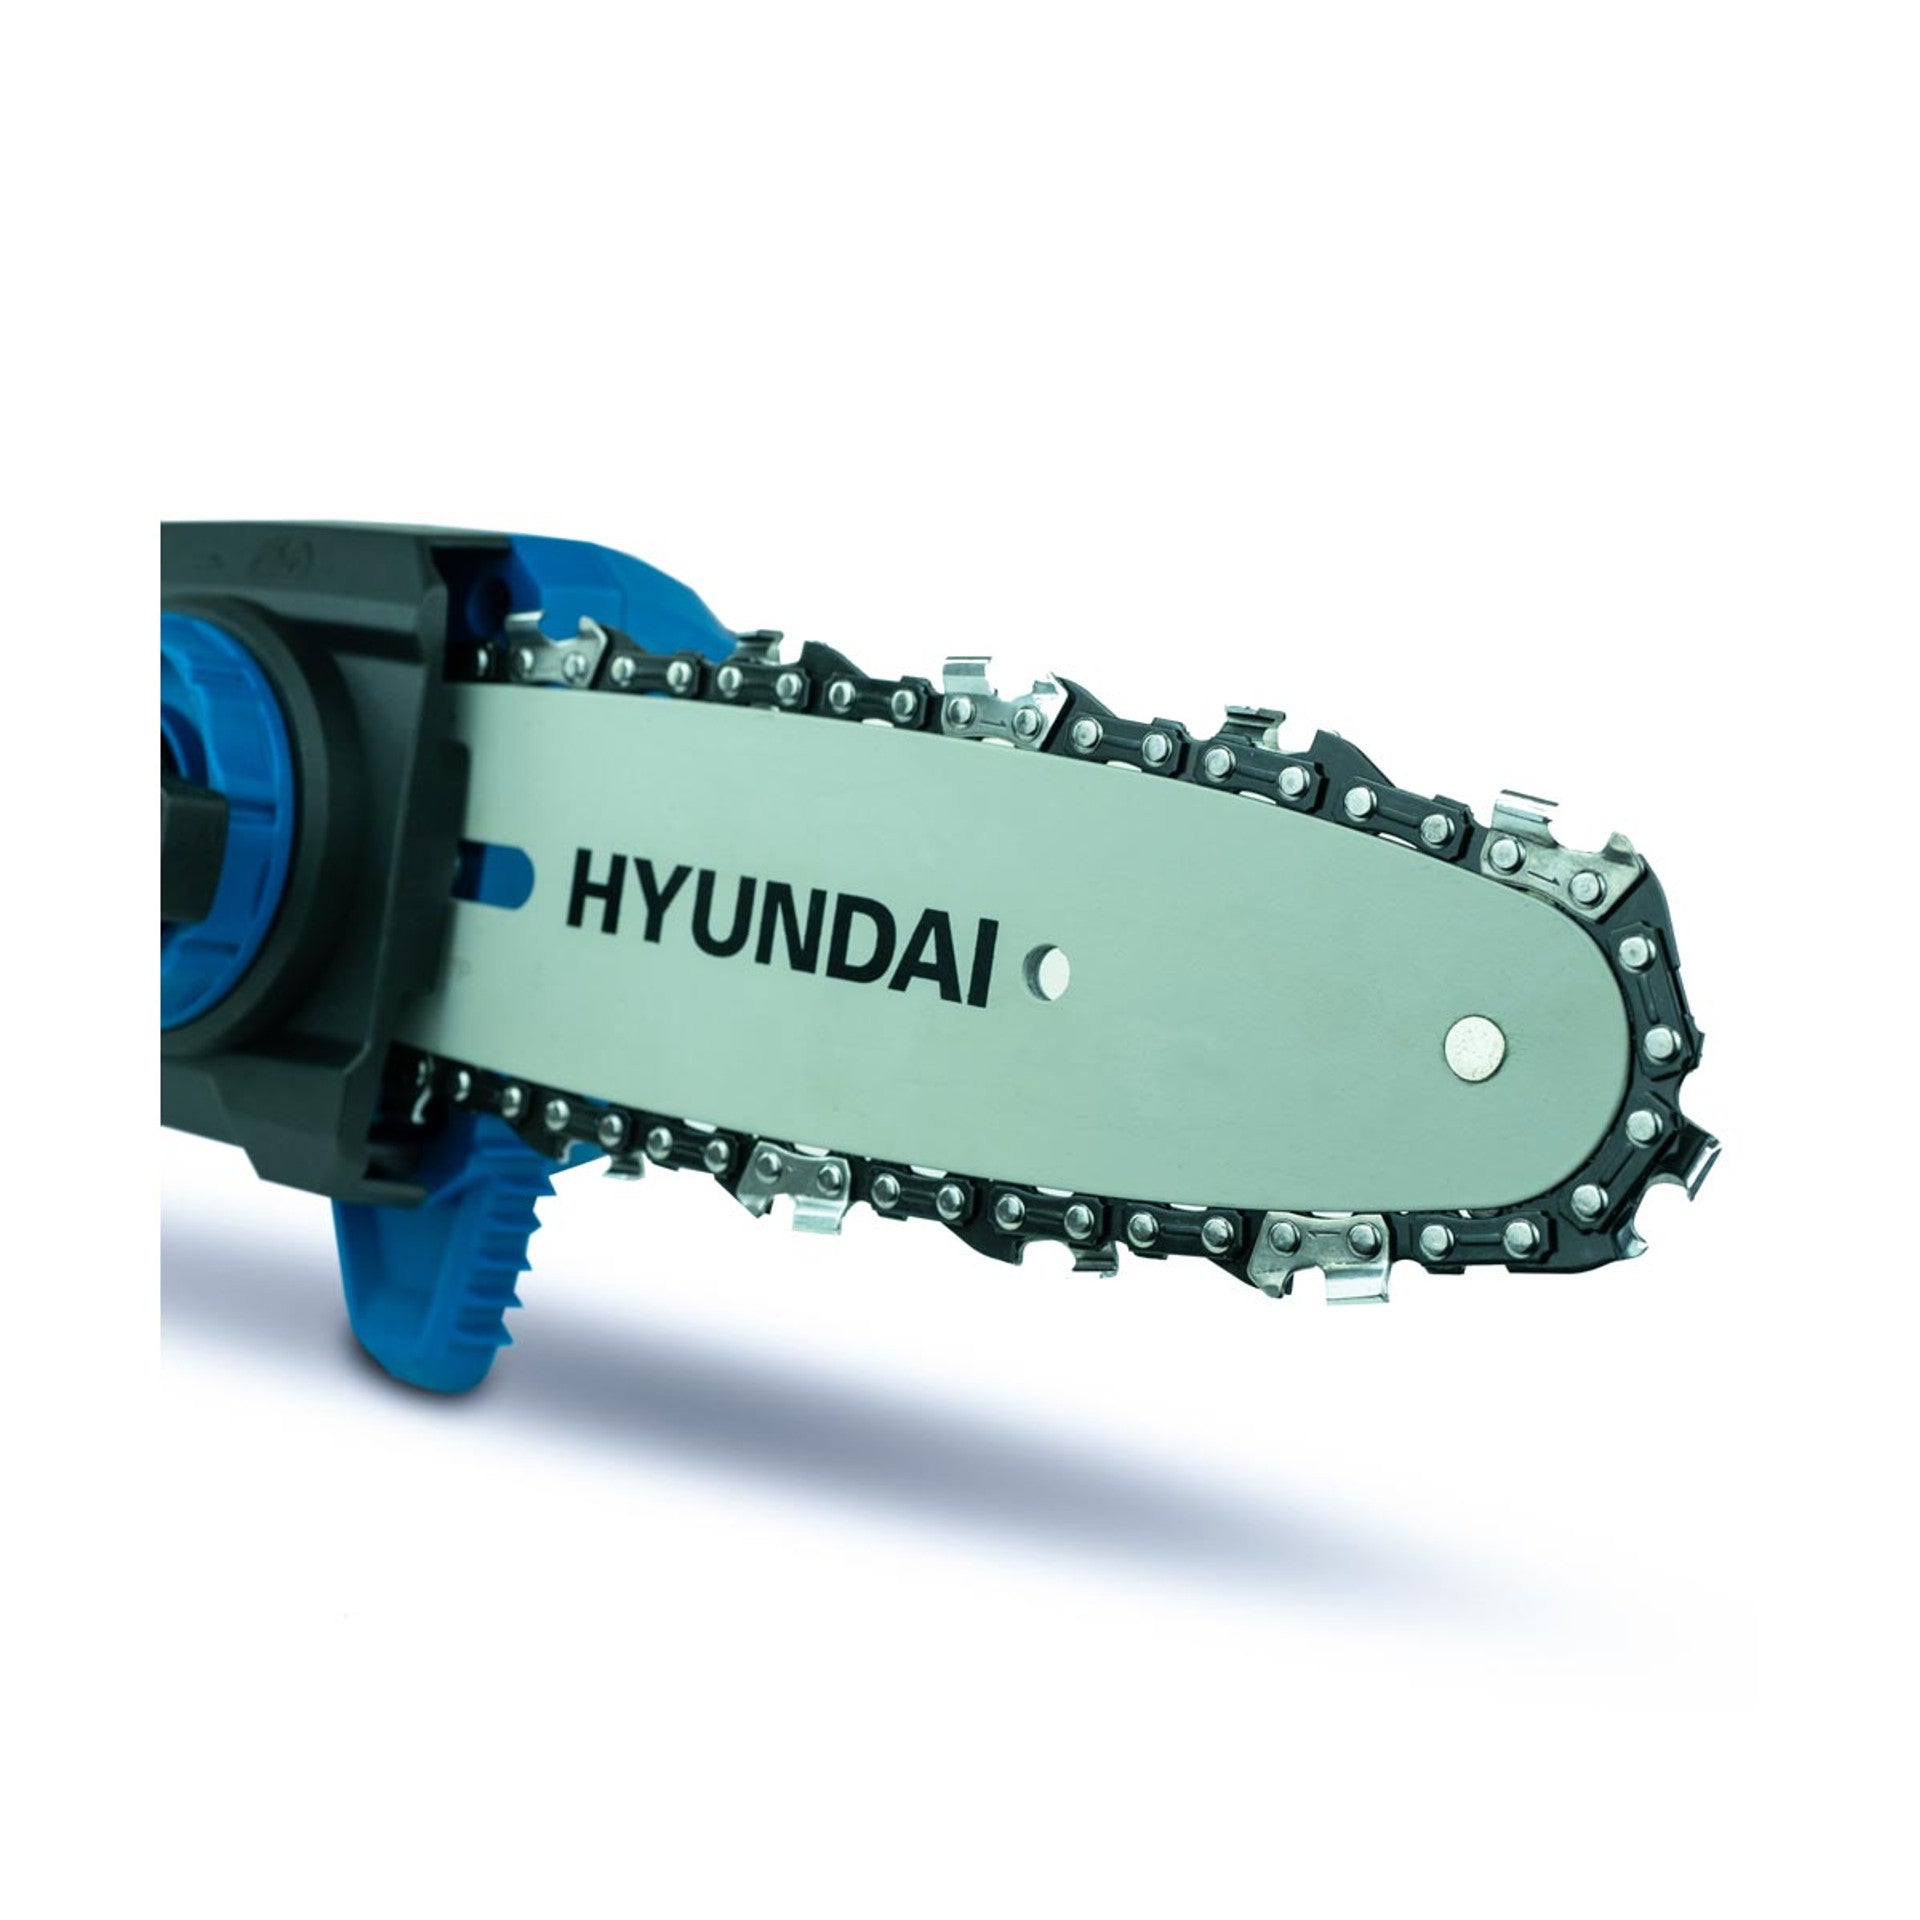 Hyundai HY2192 20V Long Reach Cordless Pole Saw Pruner